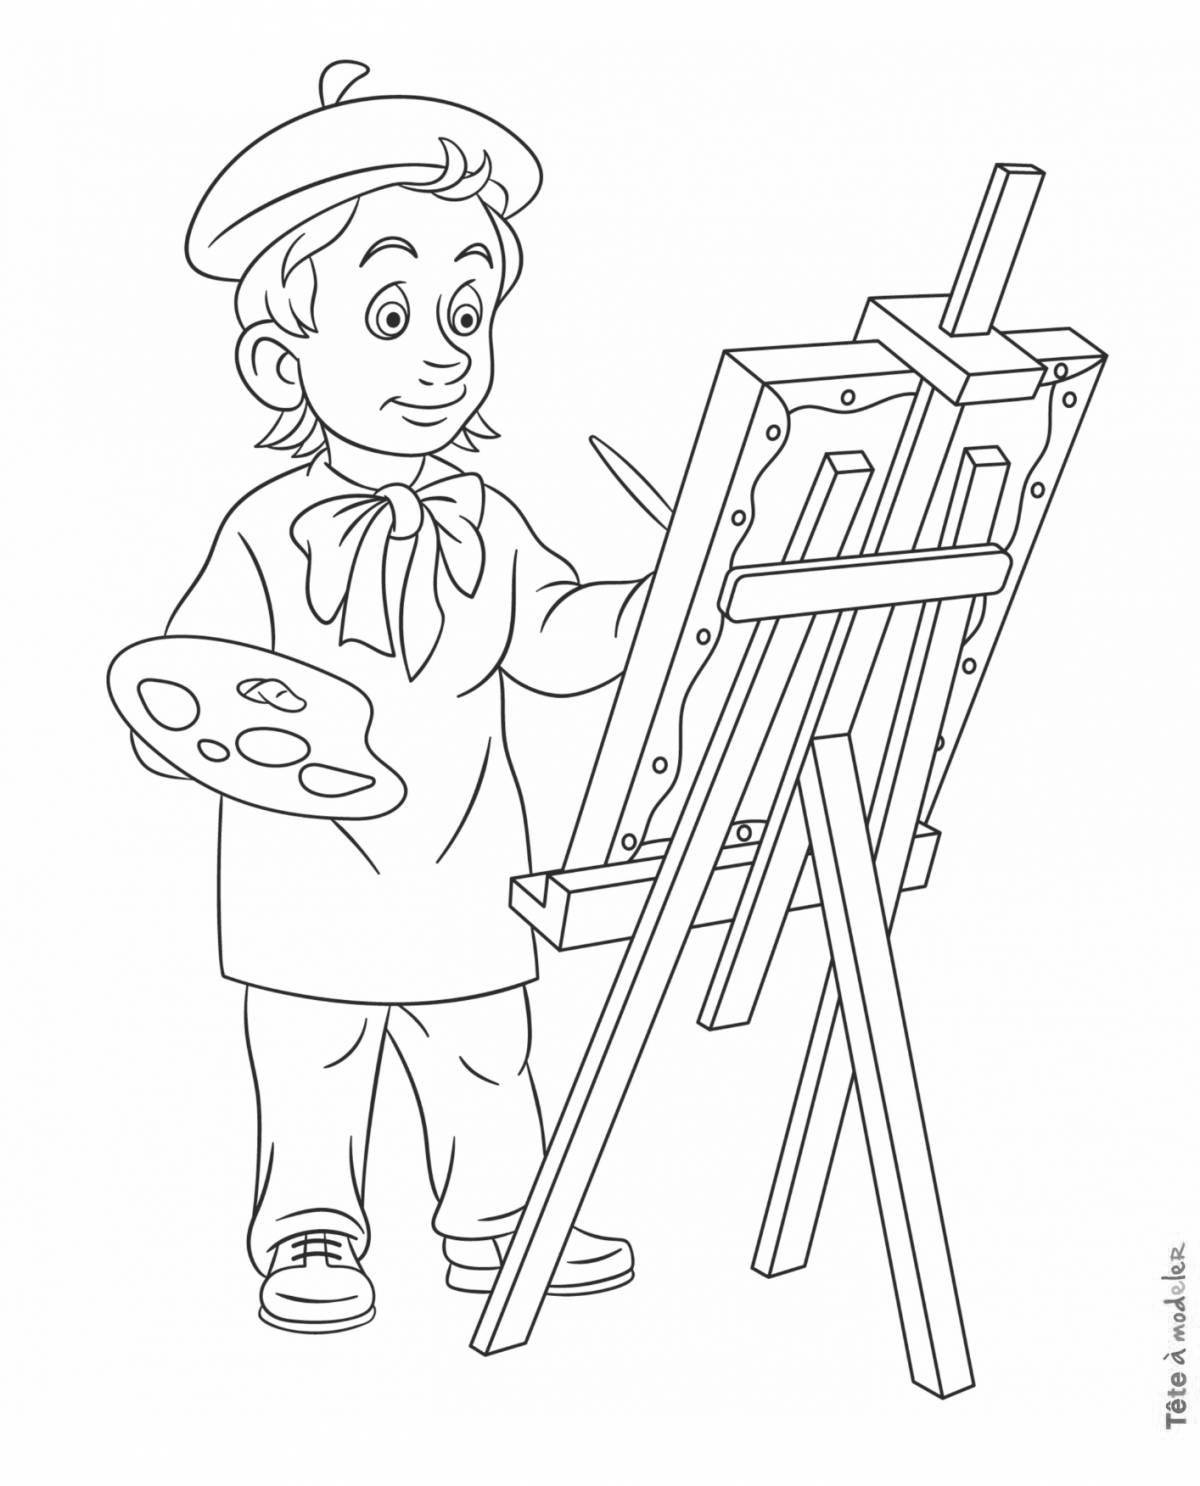 Bright coloring artist for children